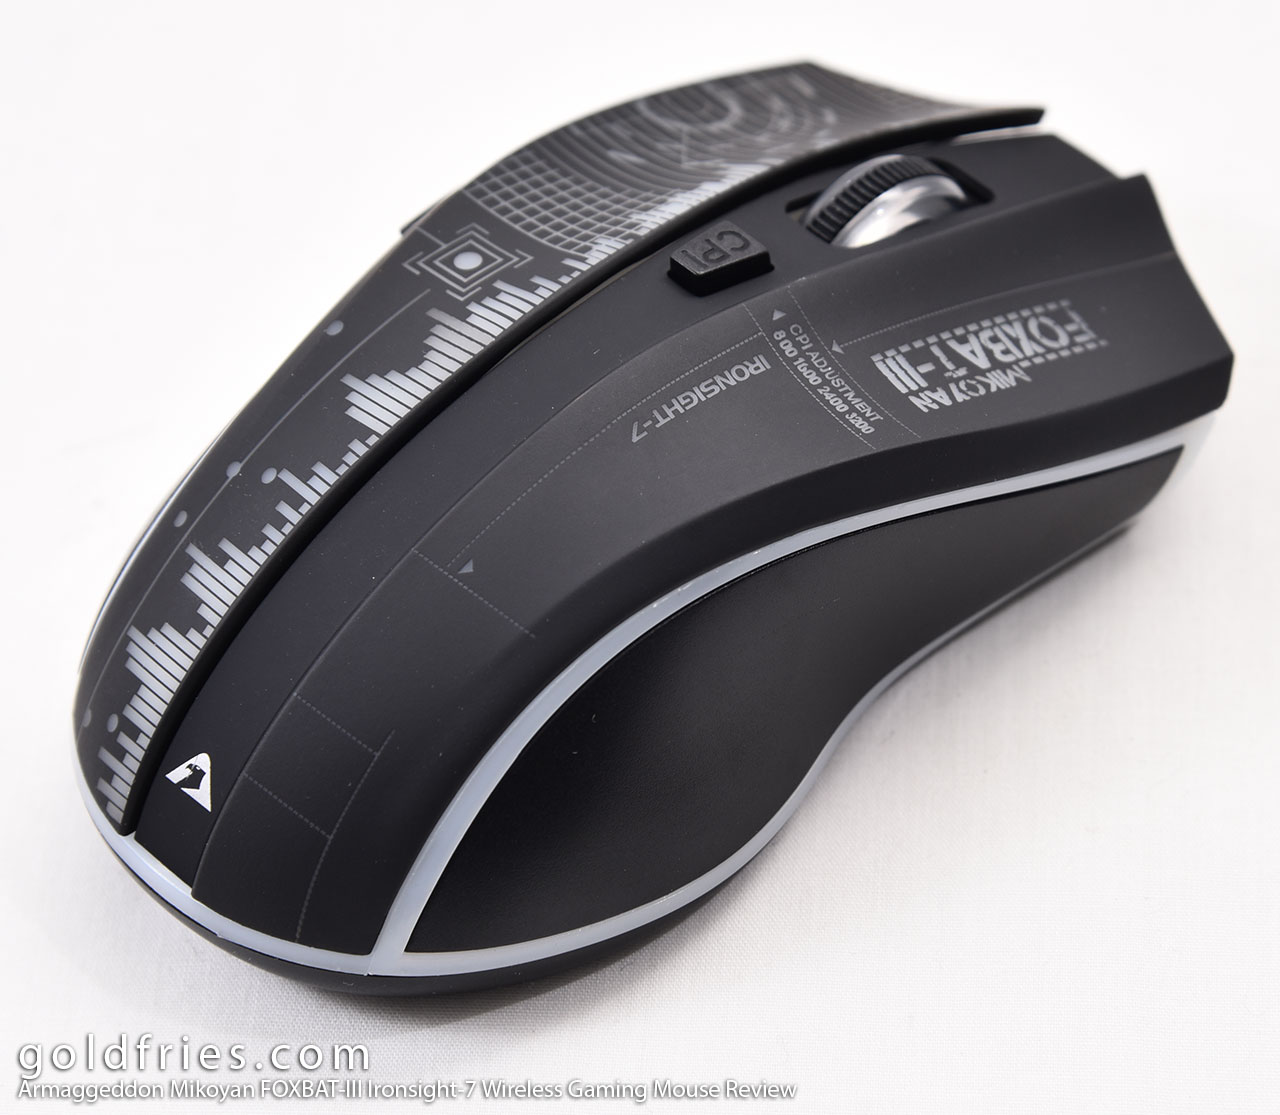 Armaggeddon Mikoyan FOXBAT-III Ironsight-7 Wireless Gaming Mouse Review